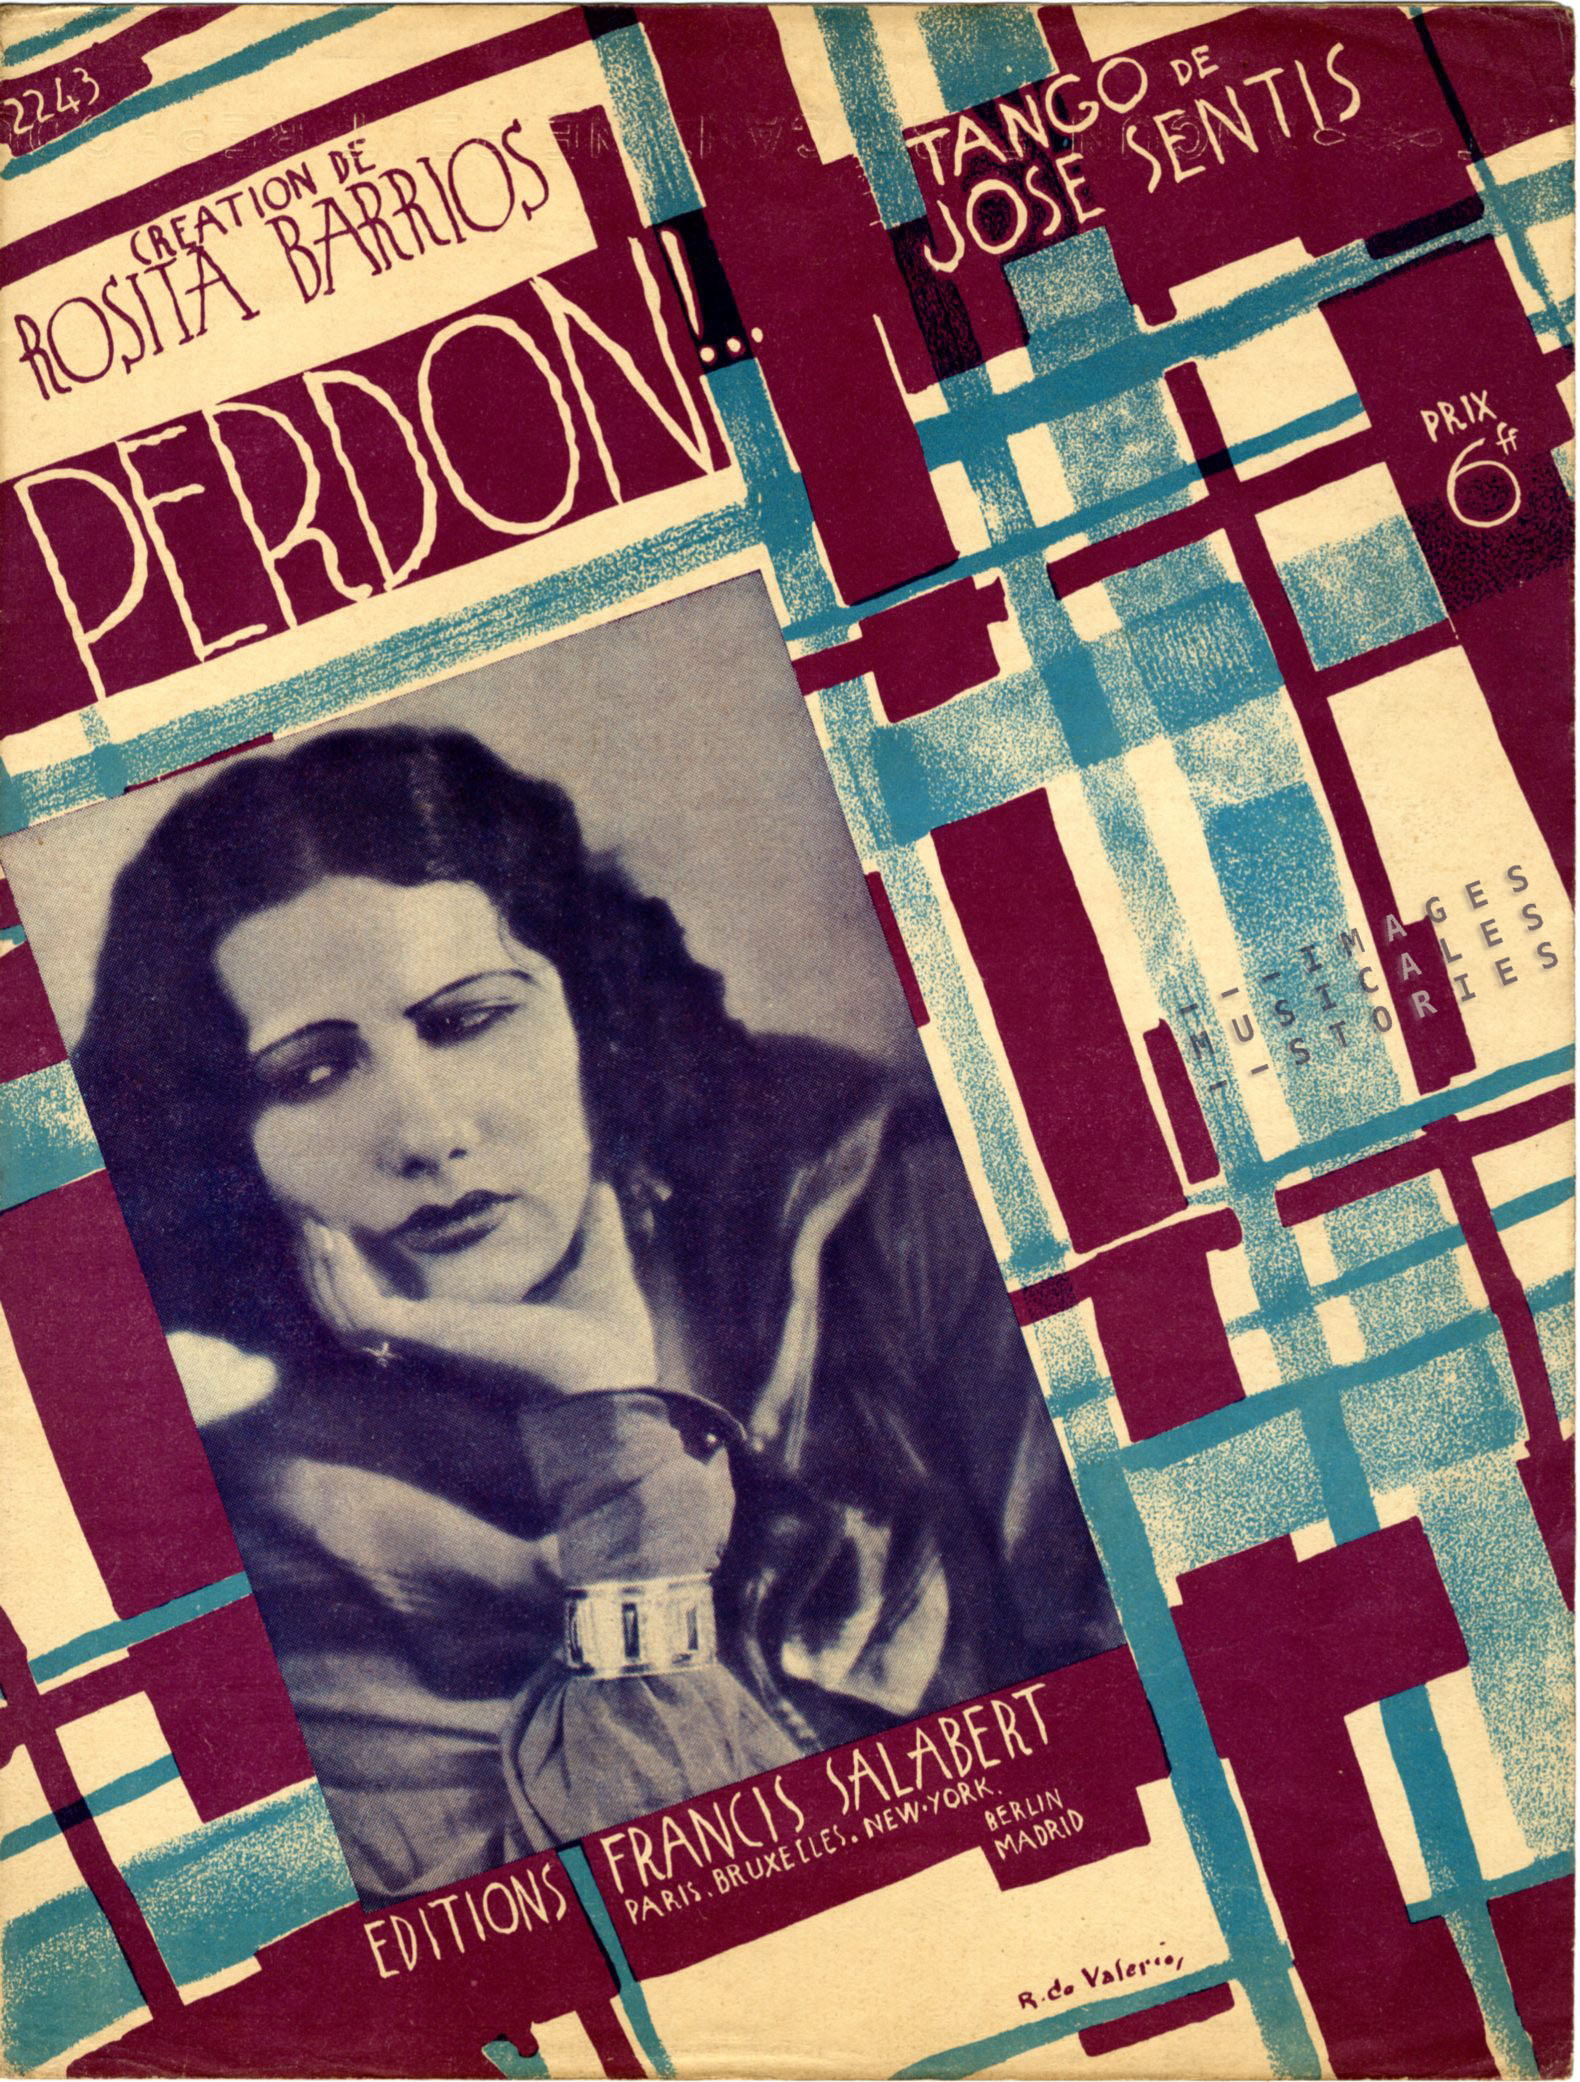 Sheet music 'Perdon!' illustrated by Roger de Valerio., 1929.